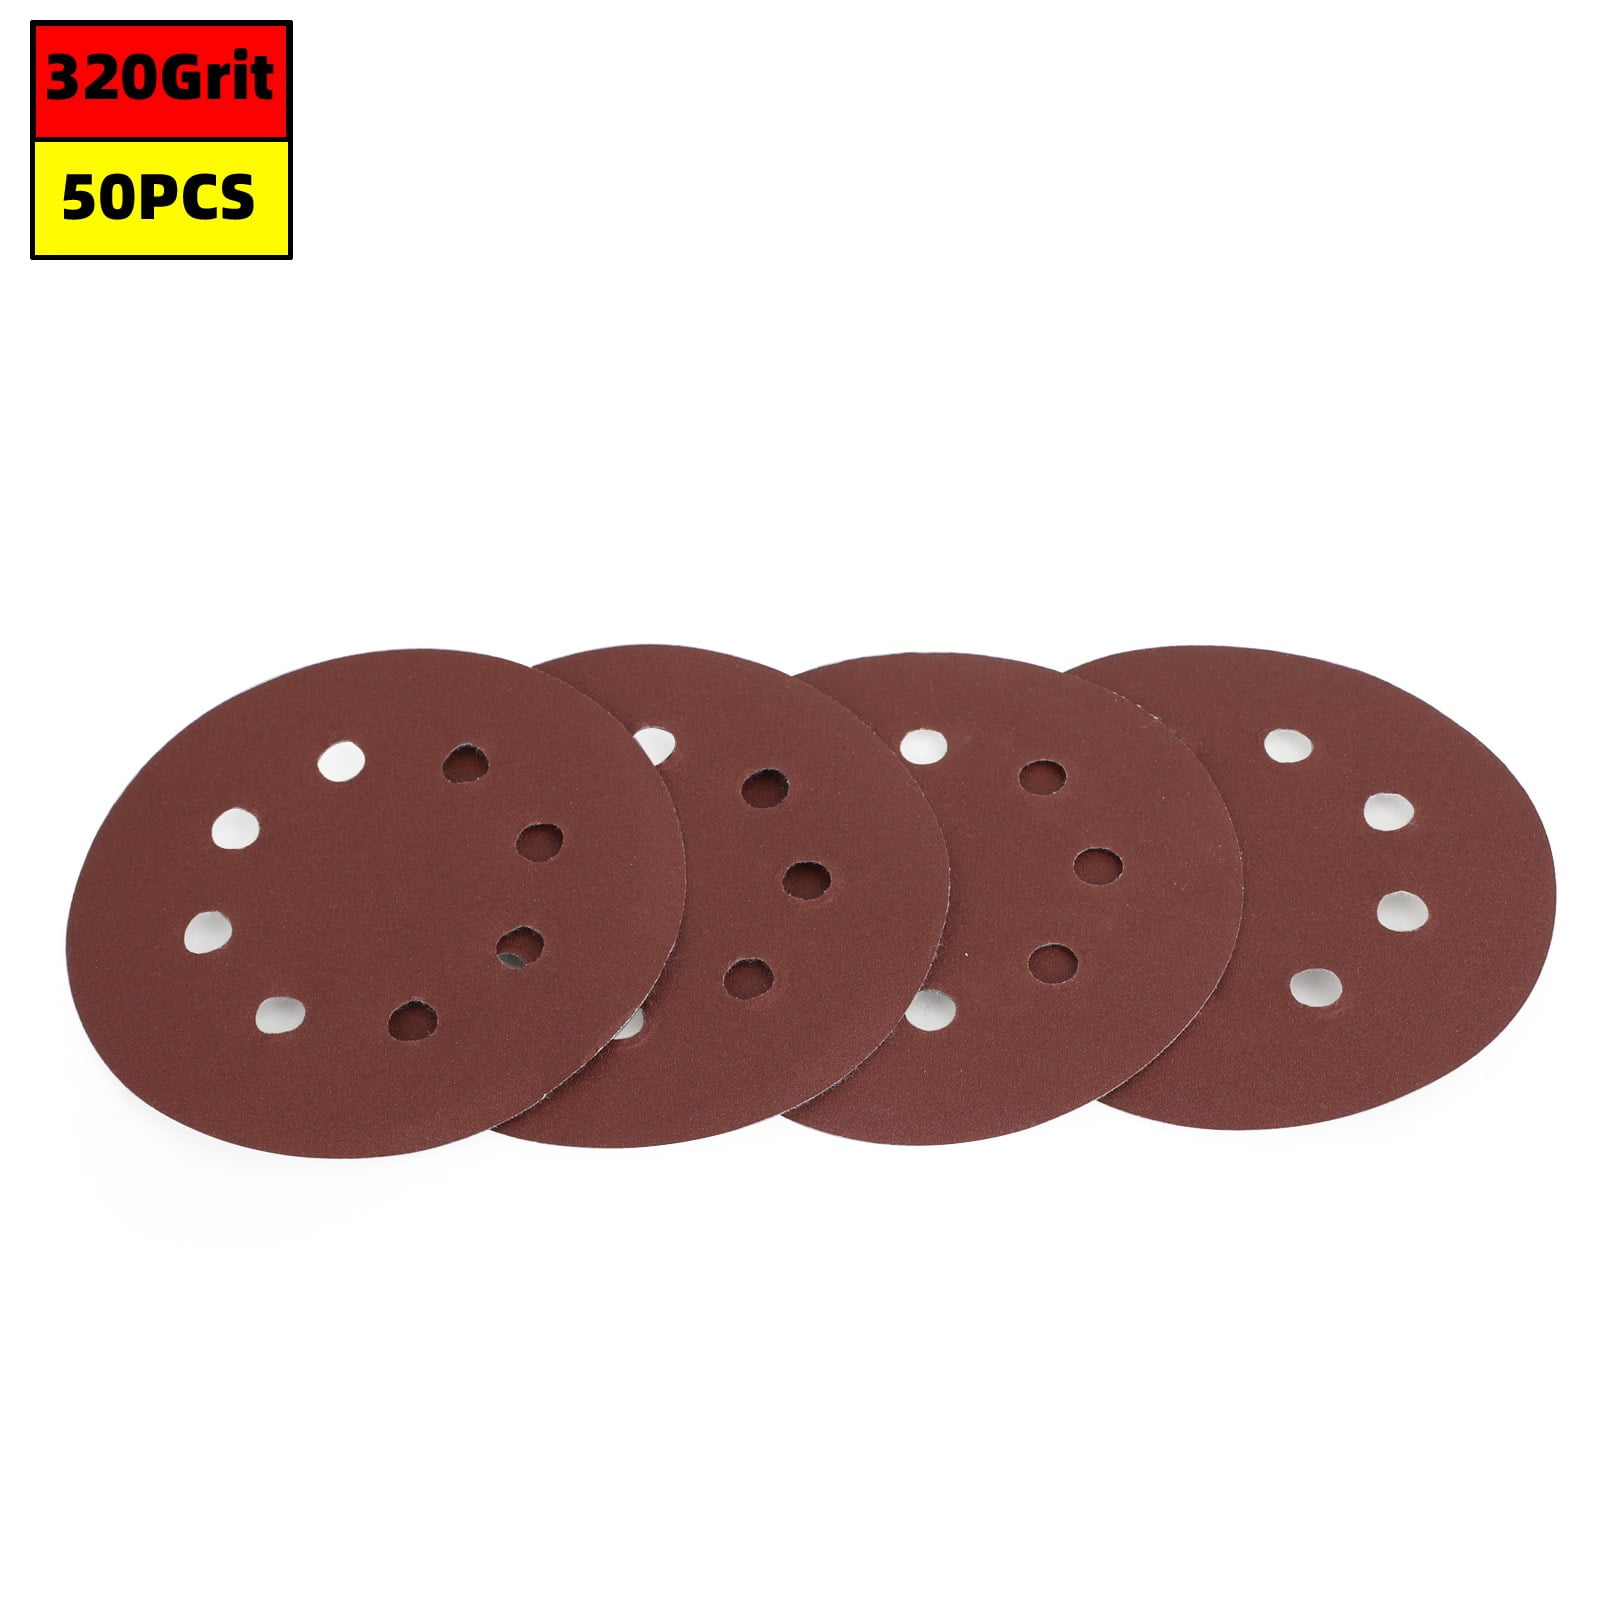 30pcs 5Inch 800-2000 Grit Mixed Sander Sanding Discs Pads Hook & Loop Sandpaper 